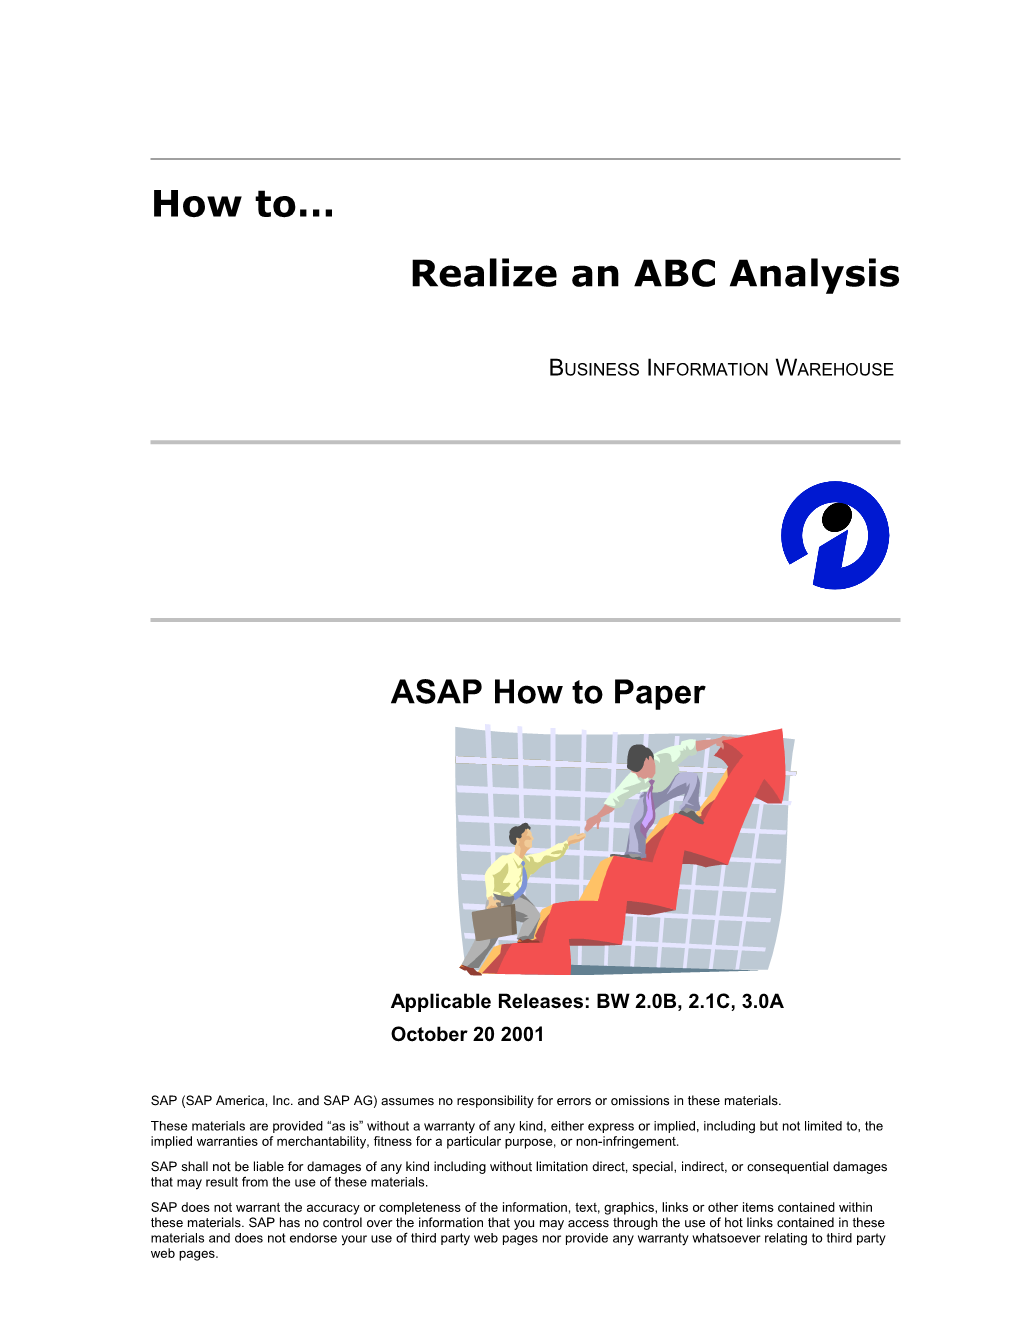 Realize an ABC Analysis